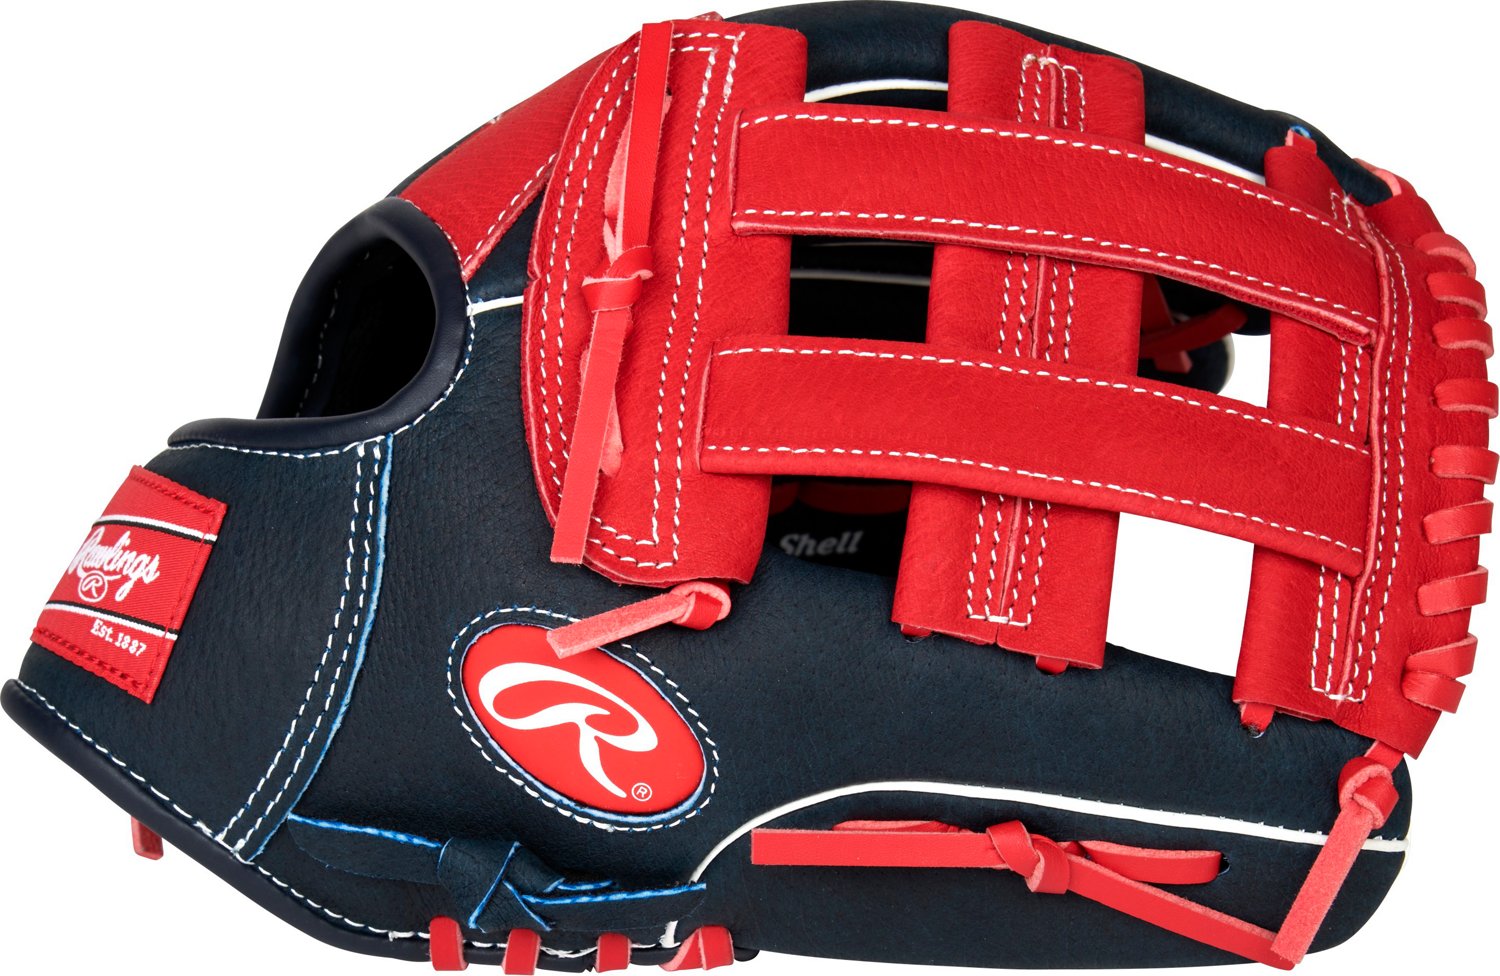 Rawlings Select Pro Lite 11.5 Ronald Acuna Jr Youth Glove